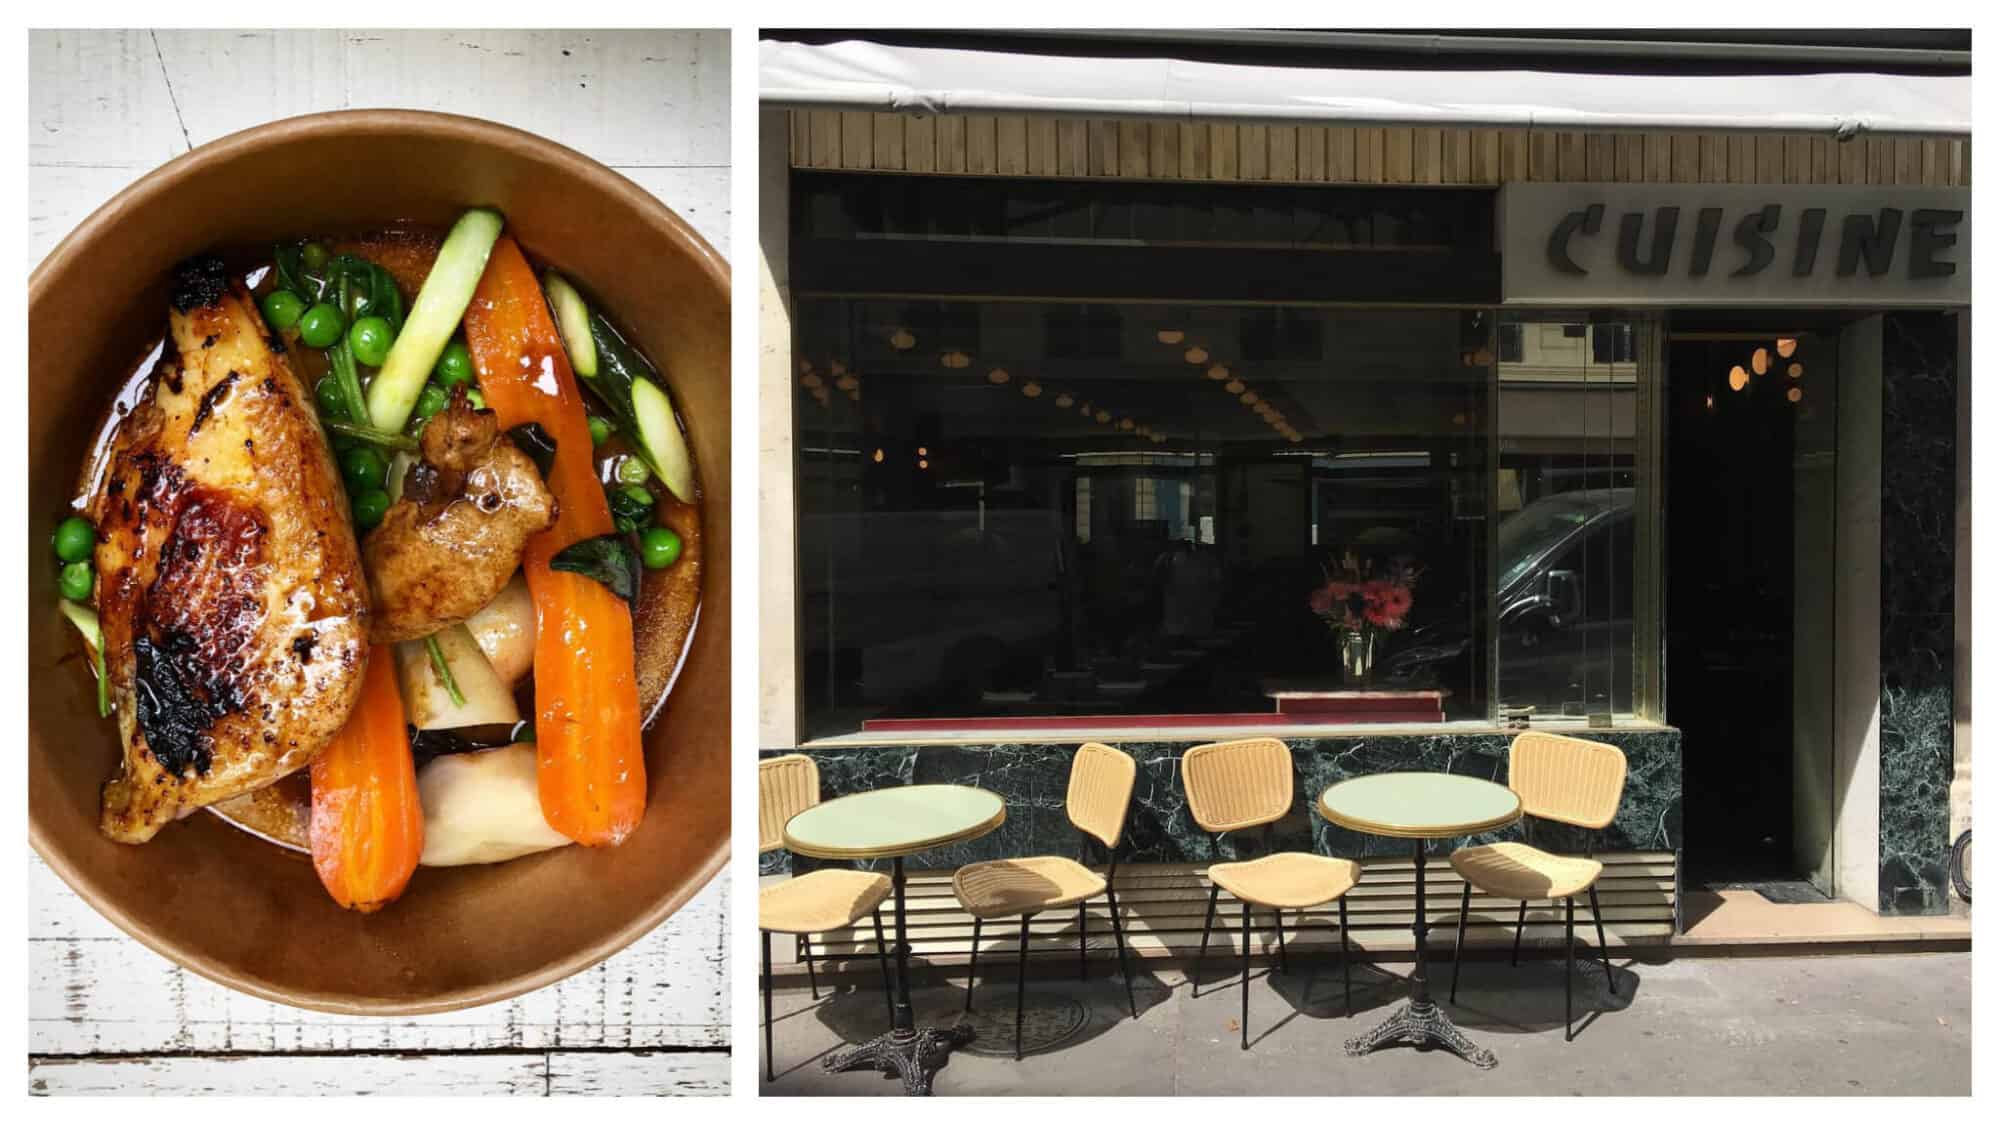 Left: a chicken and vegetable bowl from Les Enfants du Marché. Right: the terrace at Paris restaurant Cuisine.